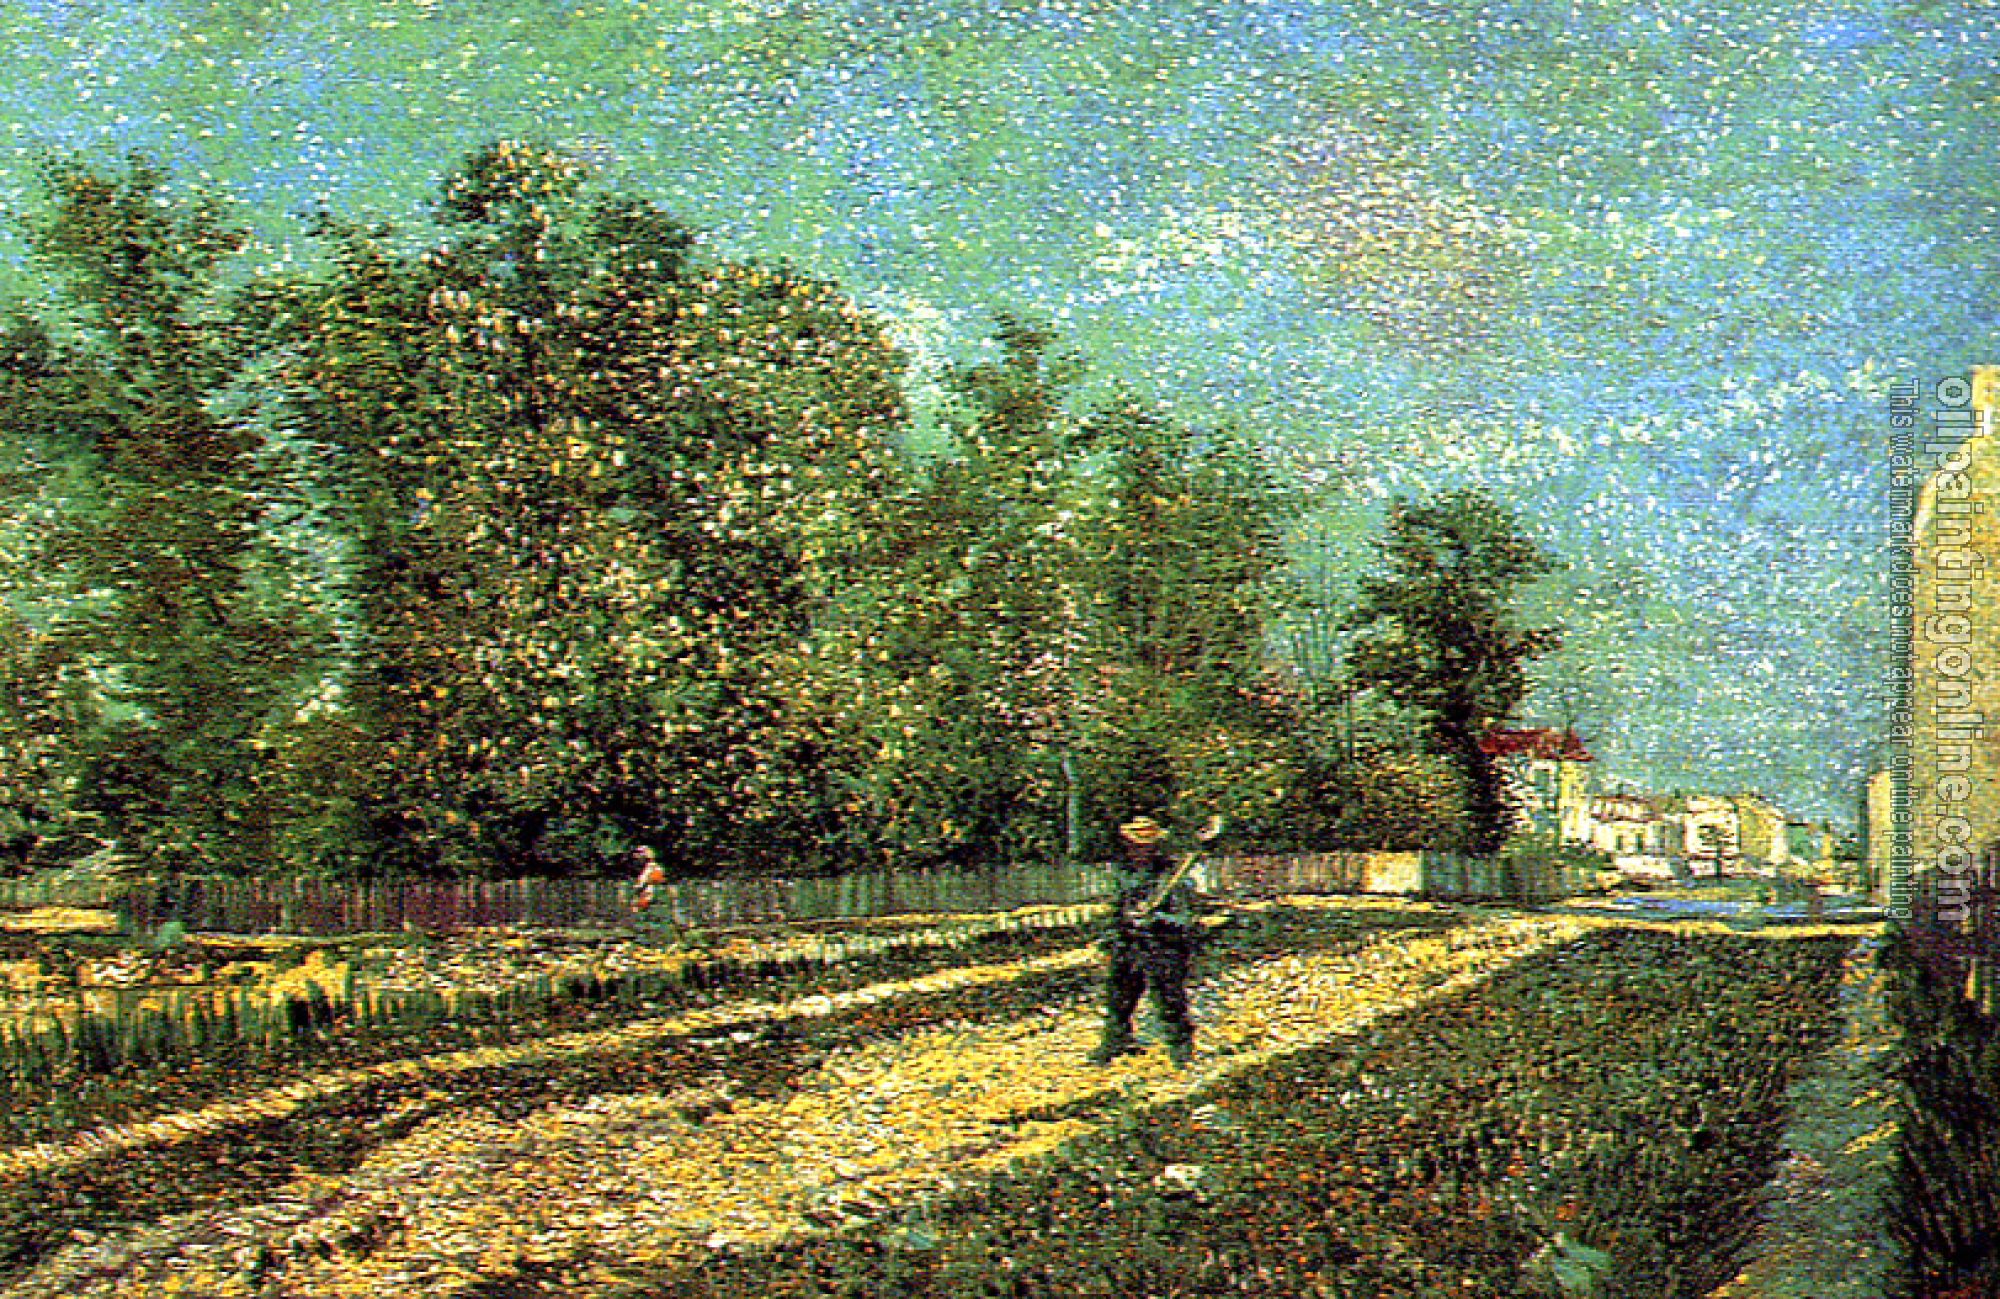 Gogh, Vincent van - A Suburb of Paris with a Man Carrying a Spade